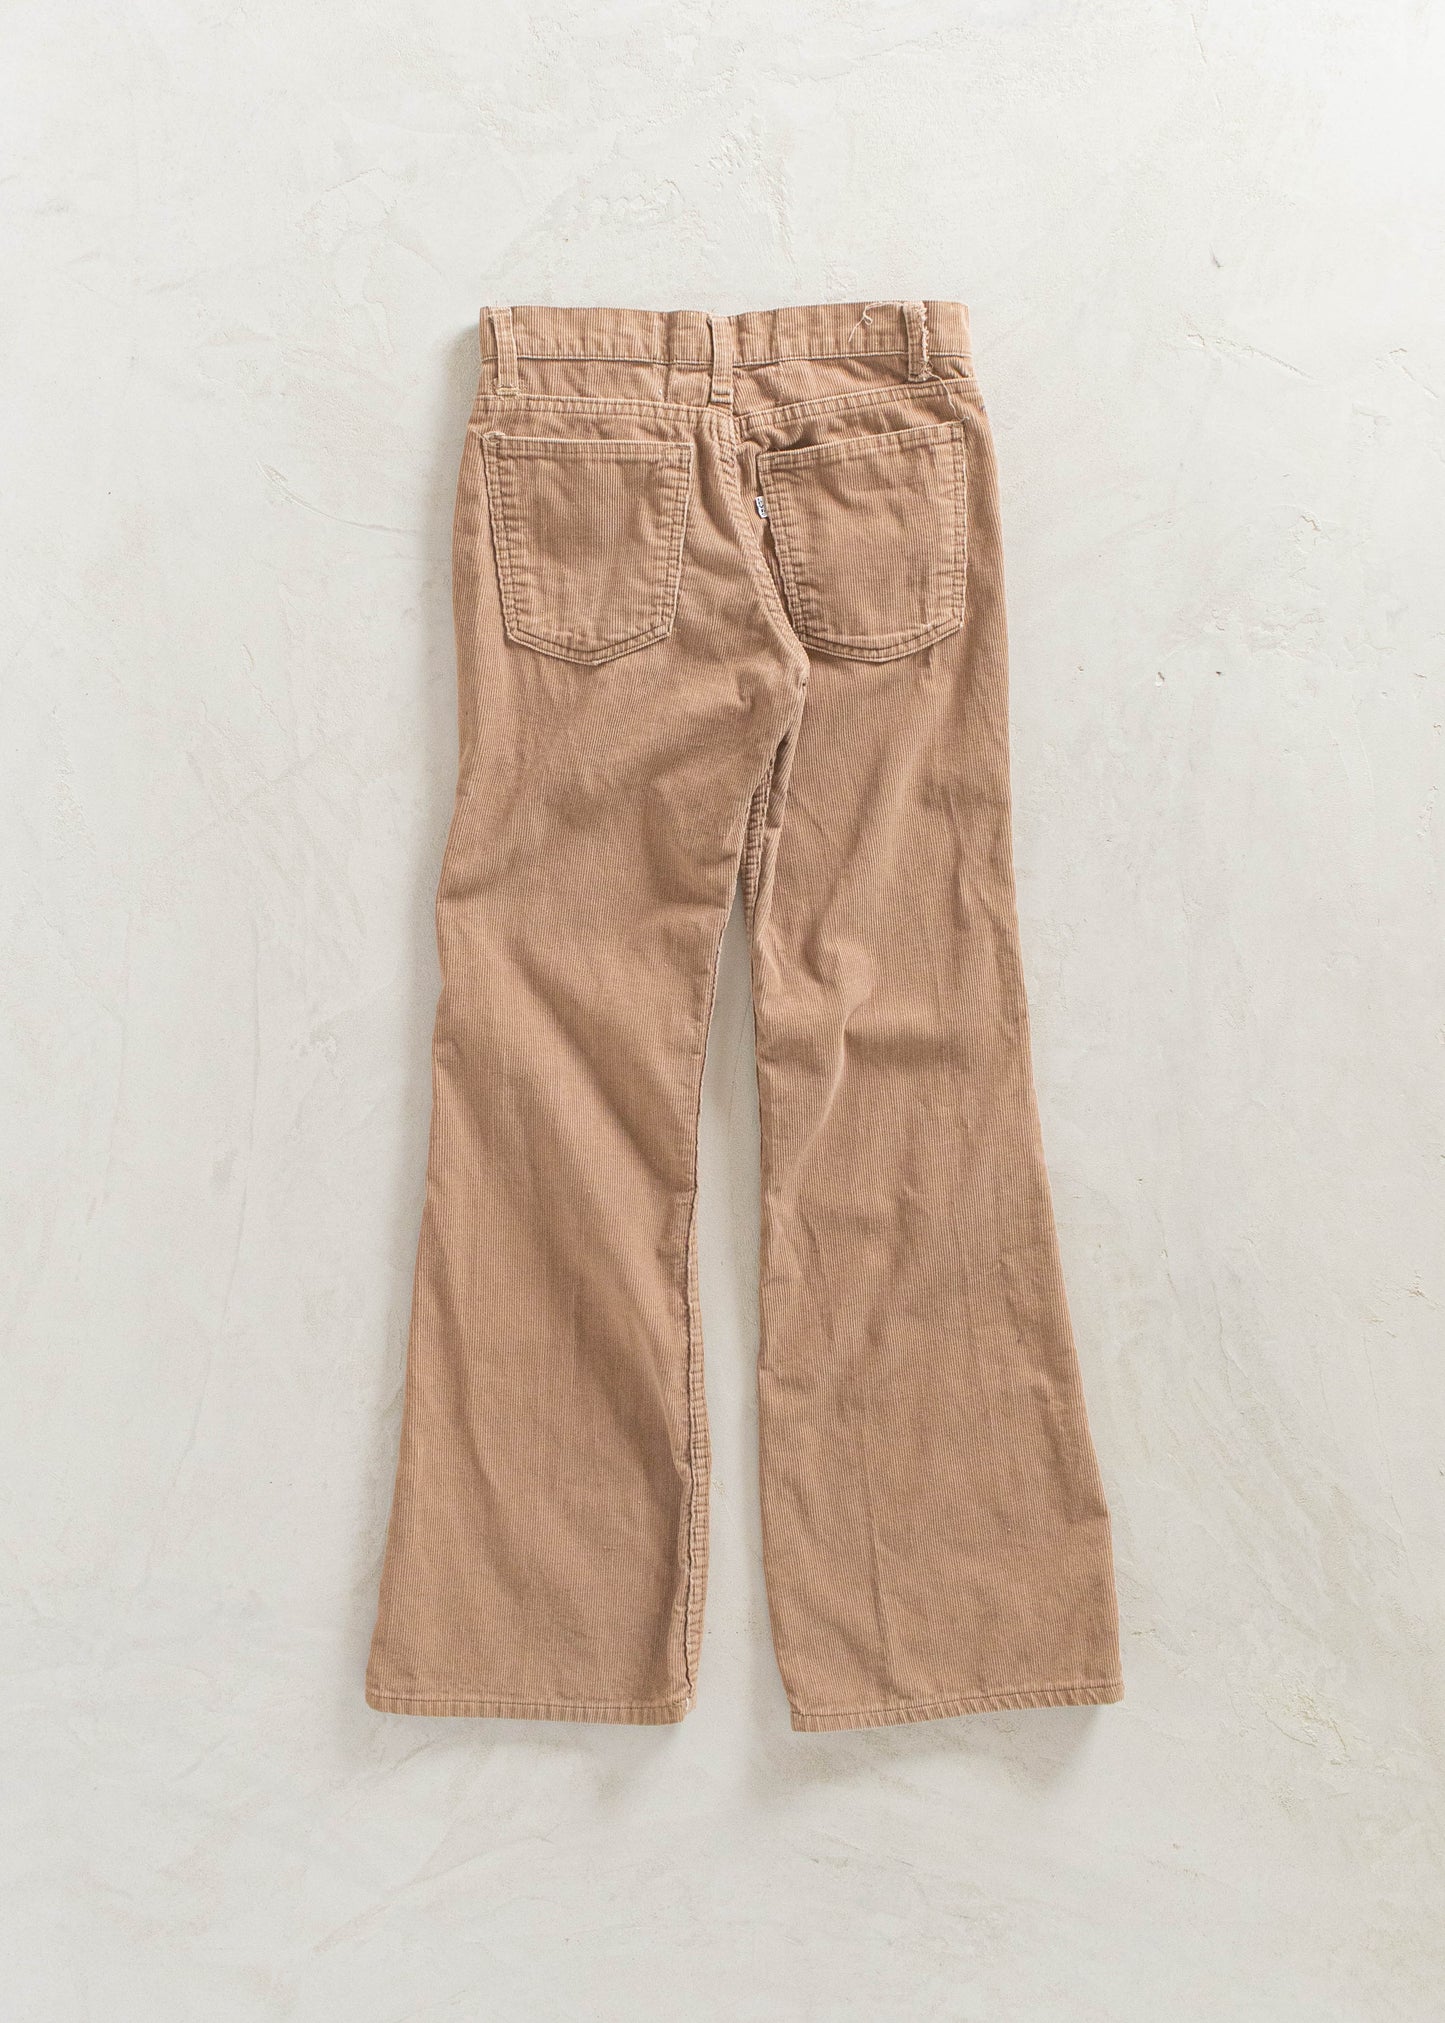 Vintage 1980s White Tab Levi's Corduroy Flare Pants Size Women's 25 Men's 28